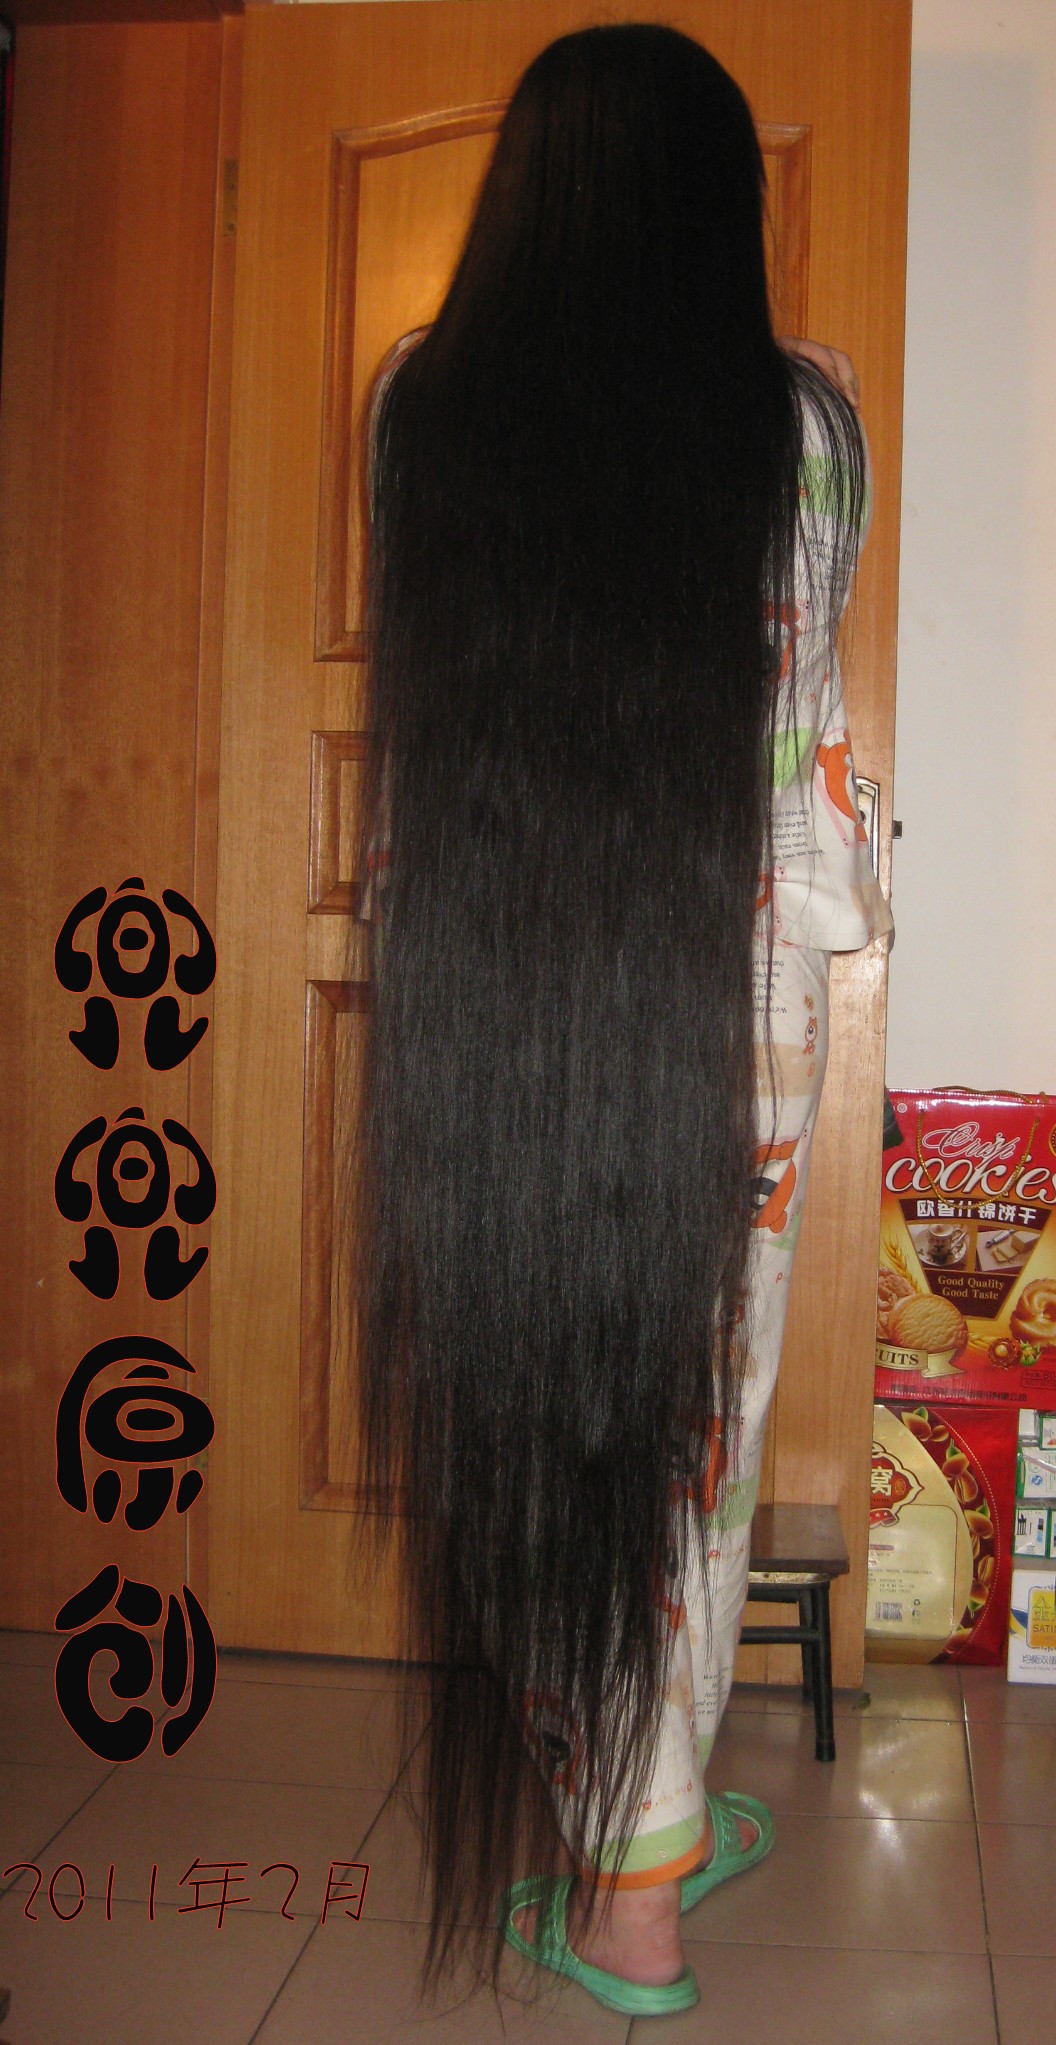 doudou's hair grew longer in 2011